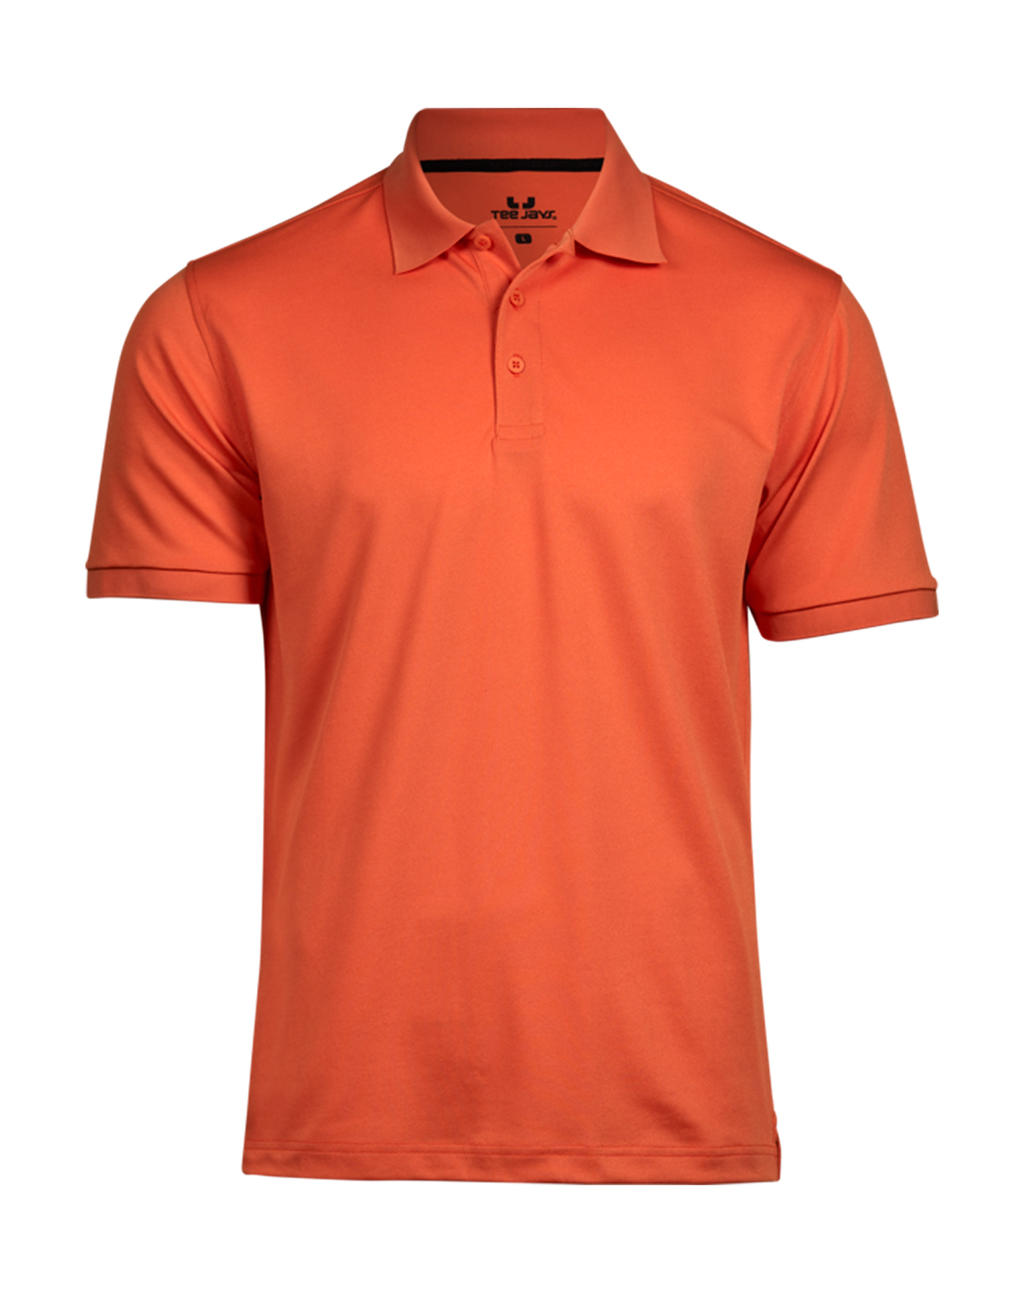  Club Polo in Farbe Dusty Orange